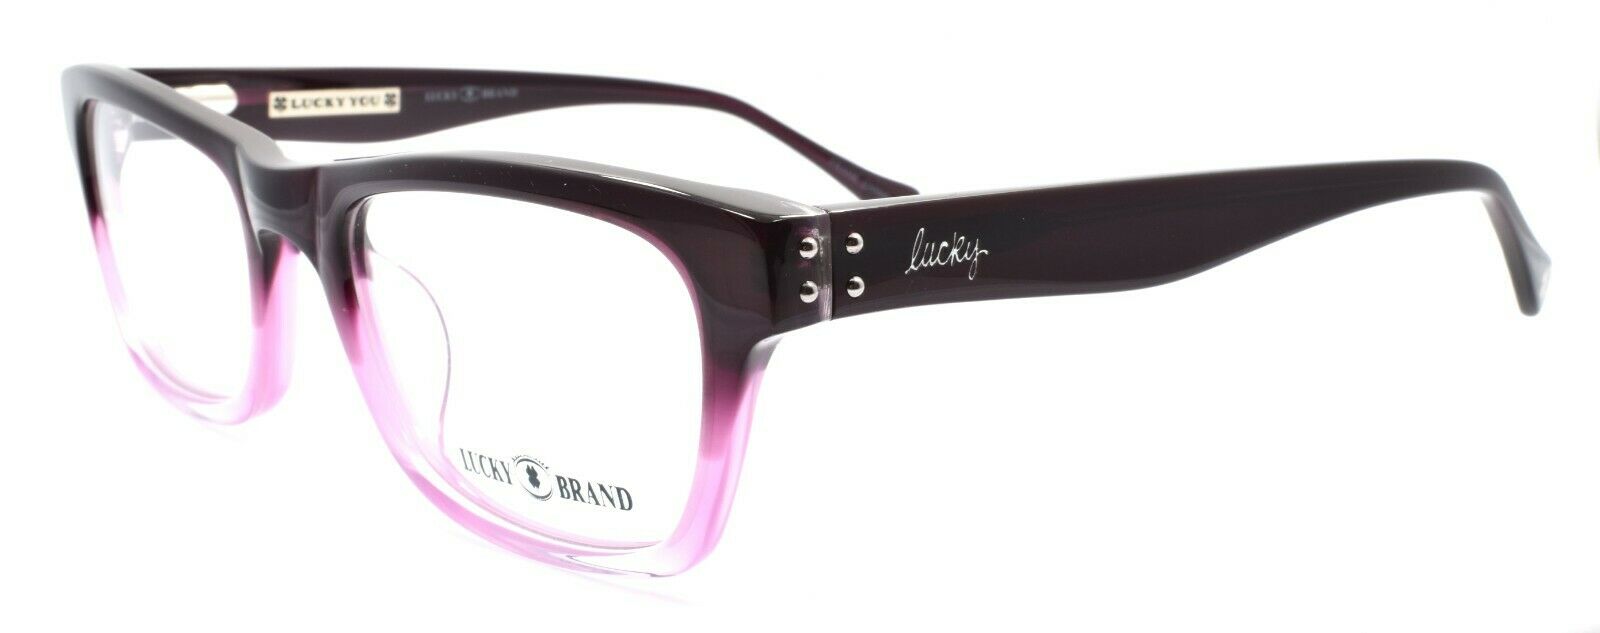 1-LUCKY BRAND Tropic UF Women's Eyeglasses Frames 52-20-140 Purple Gradient + CASE-751286248210-IKSpecs